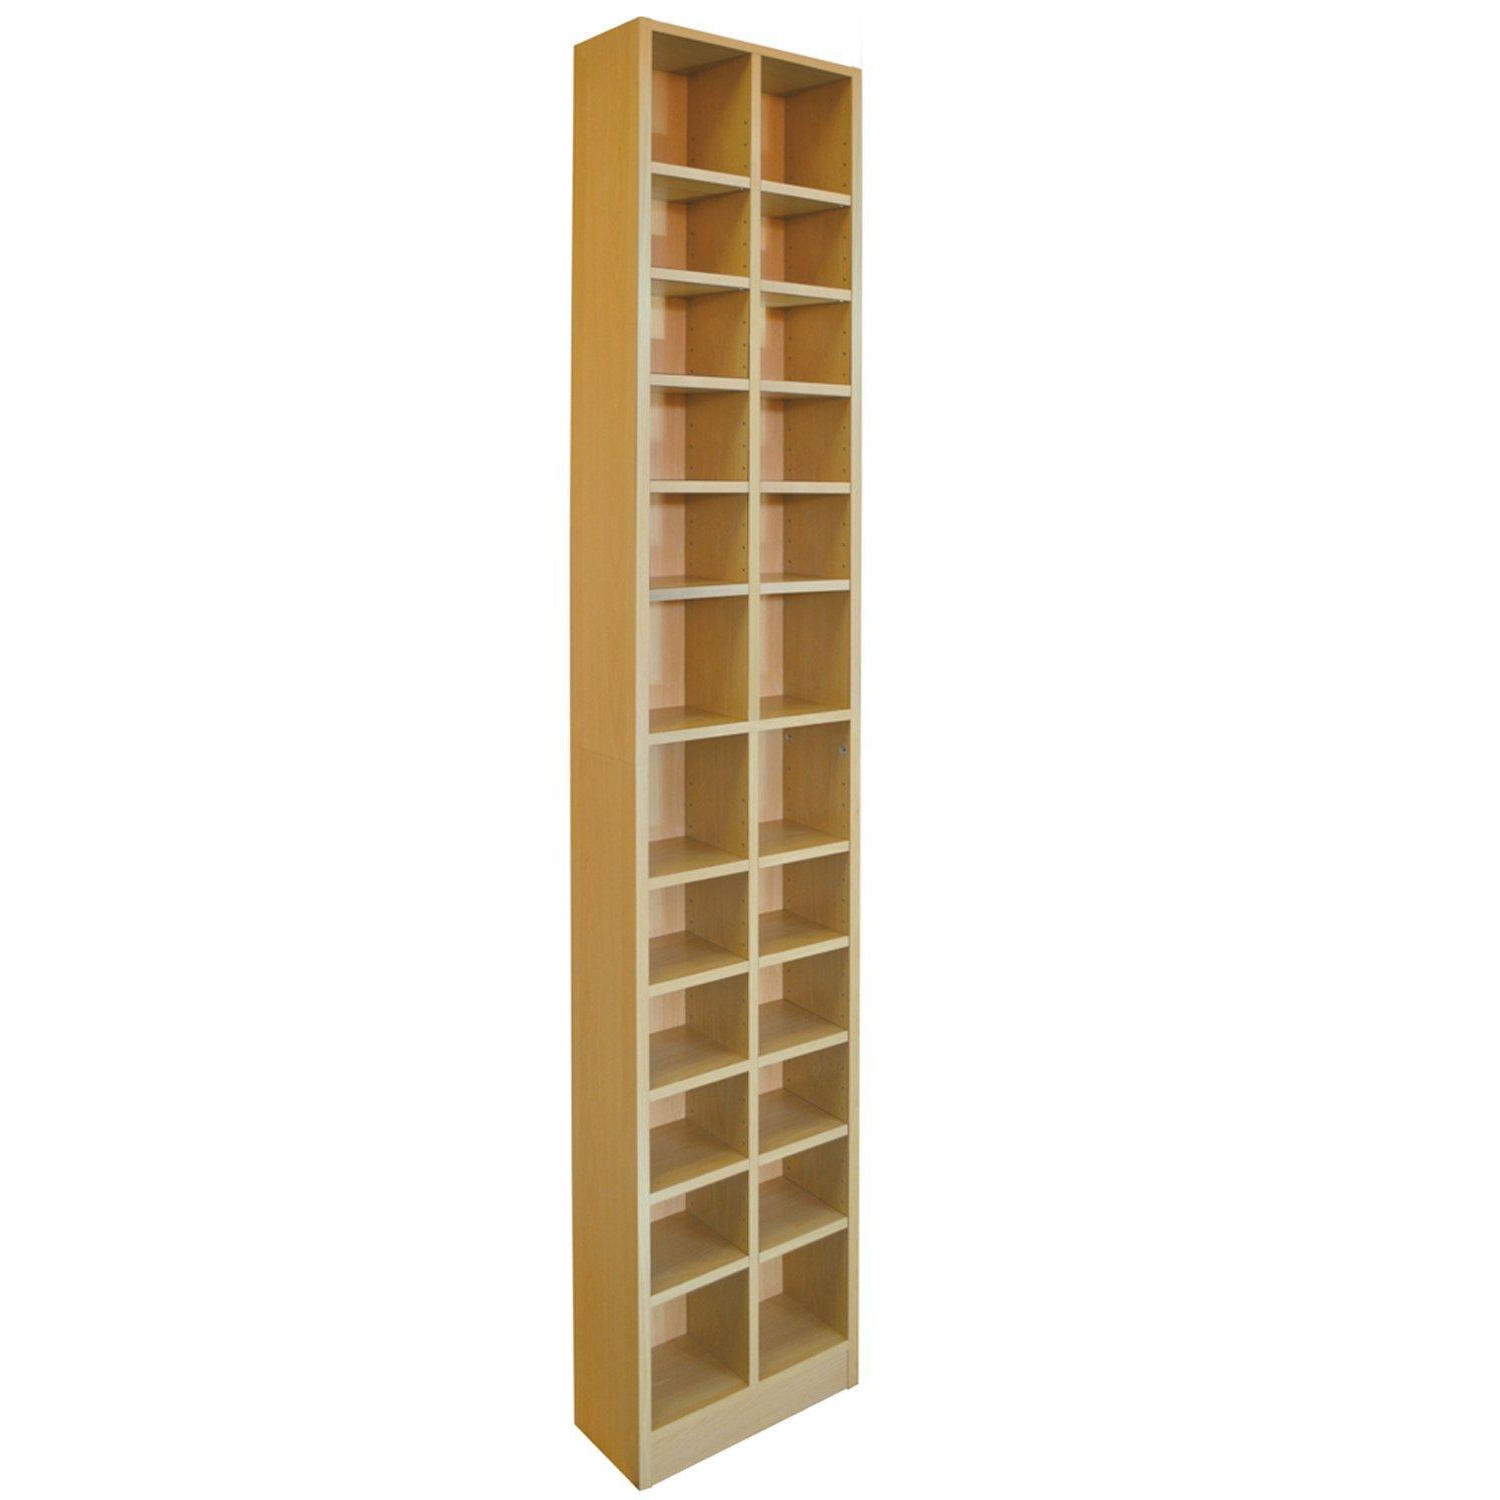 'Block' Tall Sleek 360 Cd / 160 Dvd Media Storage Tower Shelves - Beech - image 1